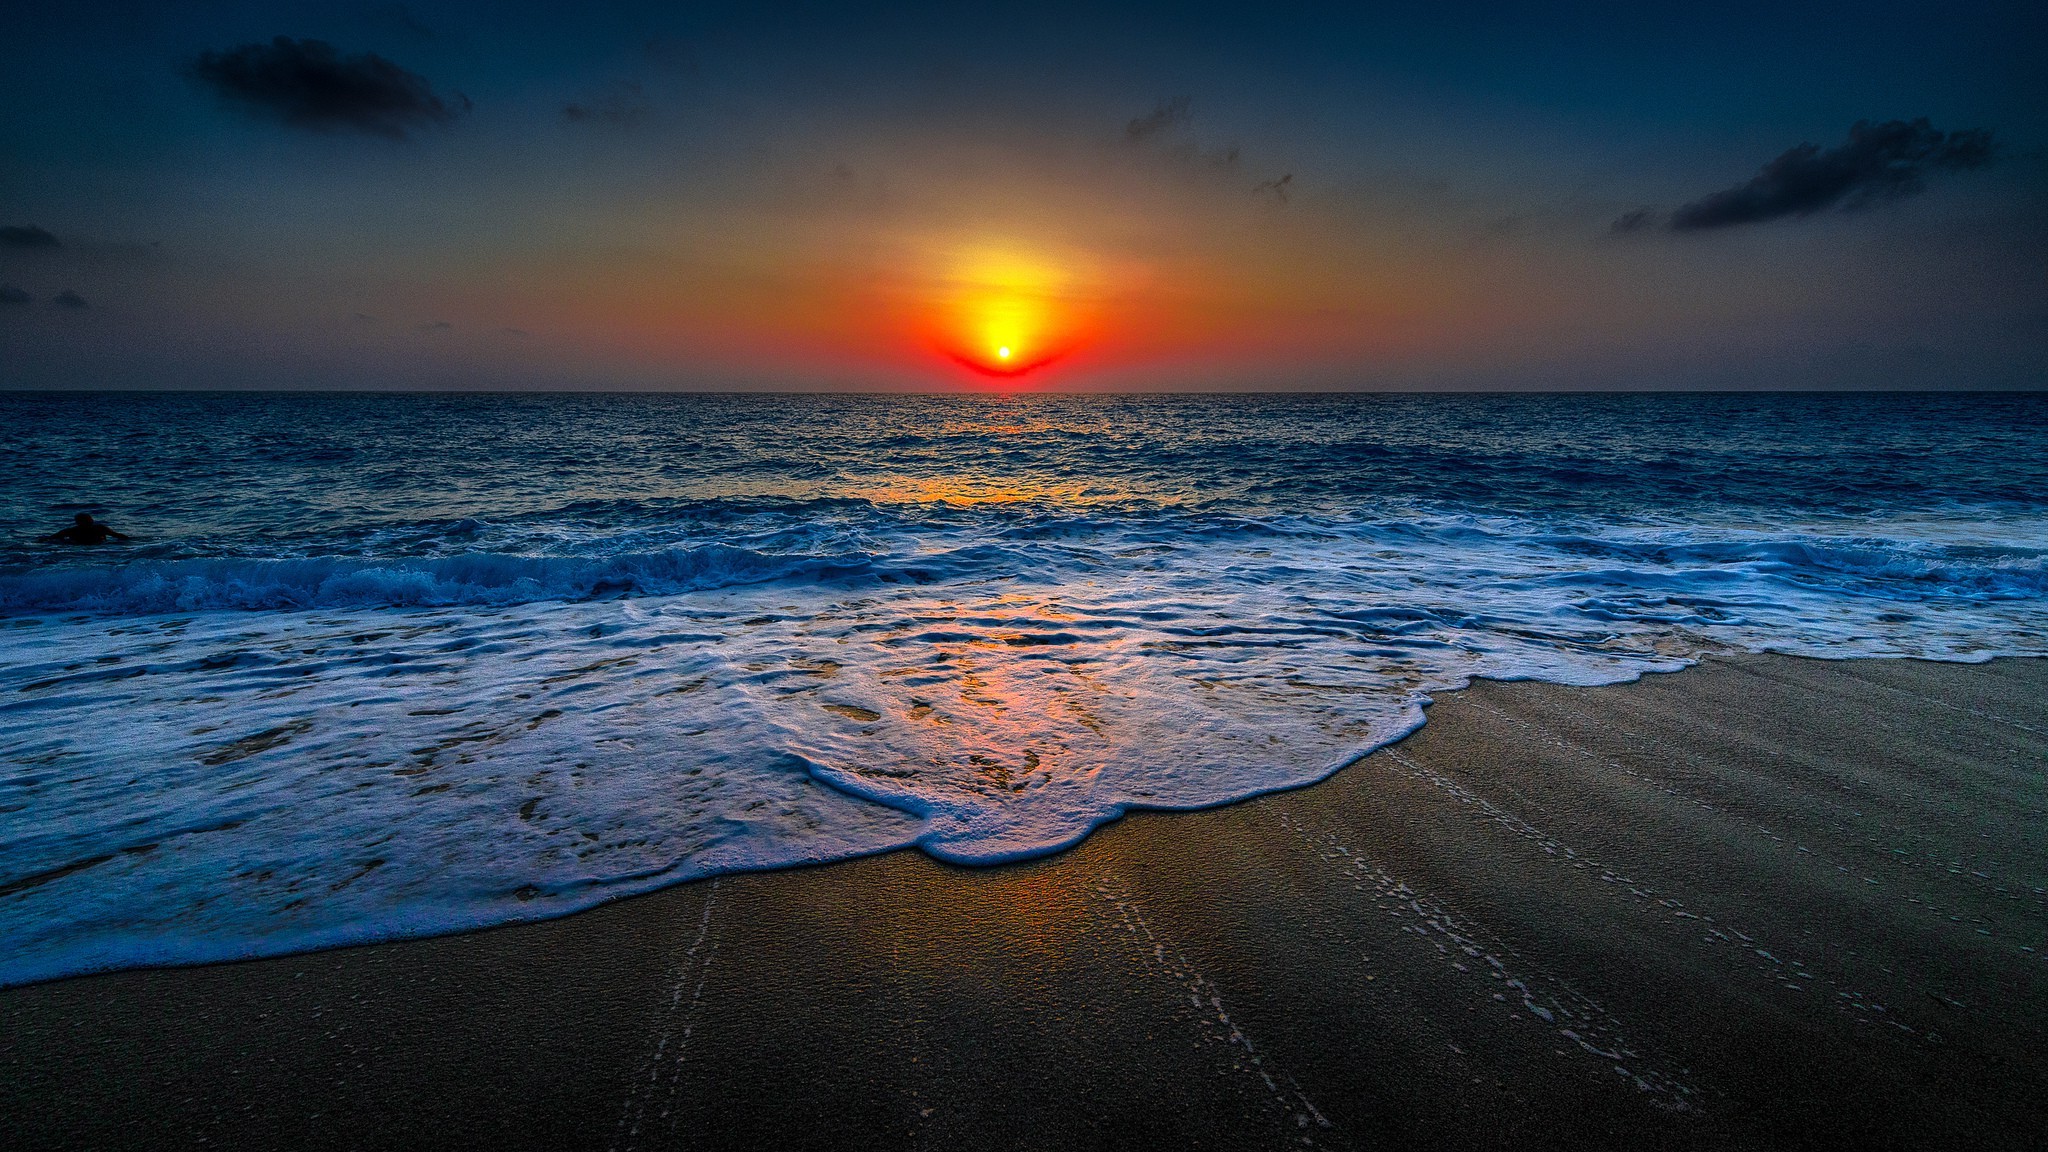 sunset beach landscape